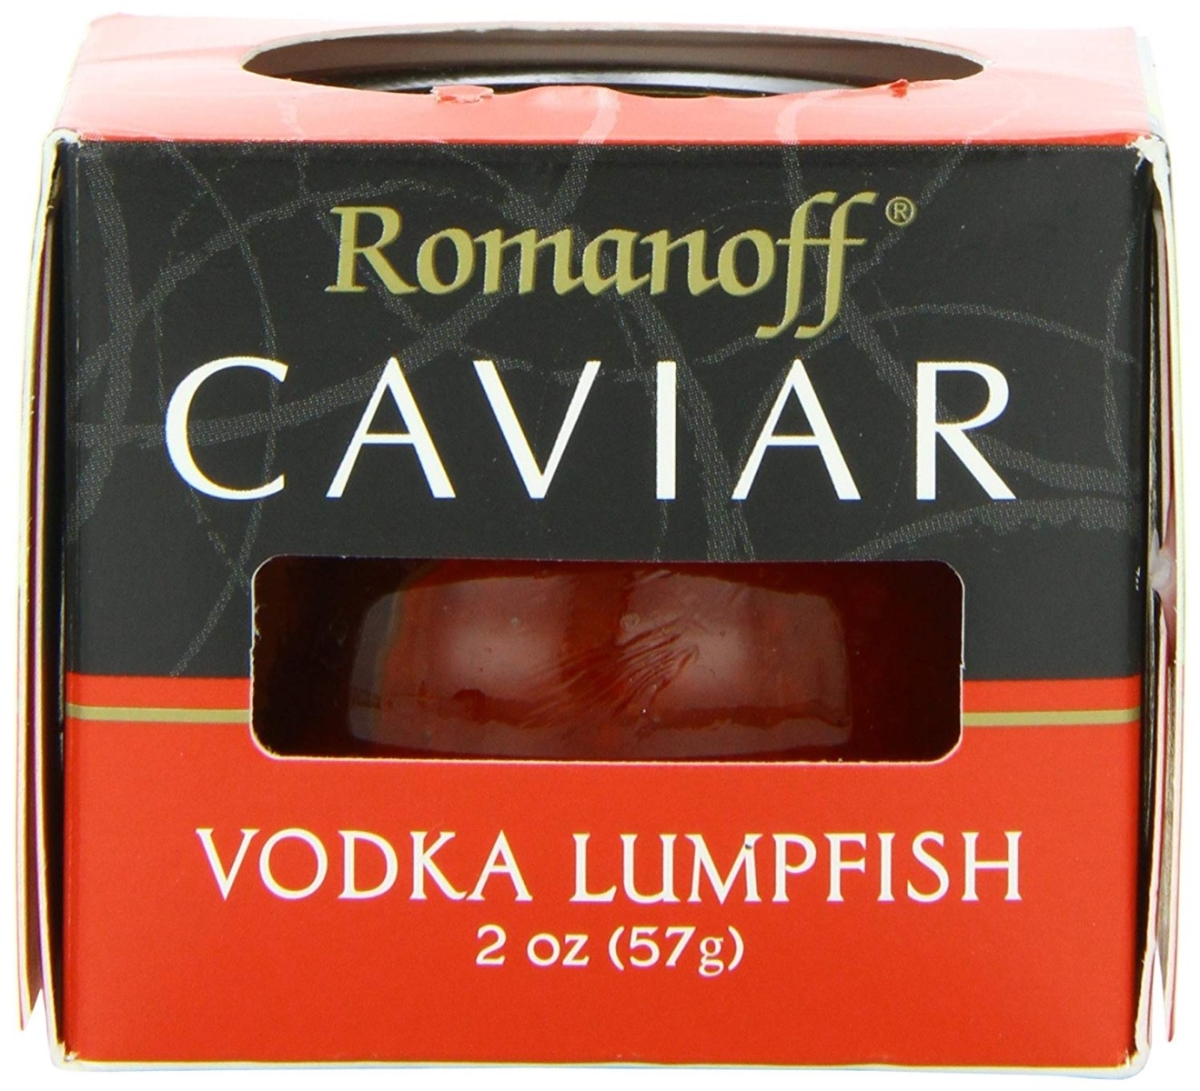 Khlv00011090 Red Vodka Lumpfish Caviar, 2 Oz